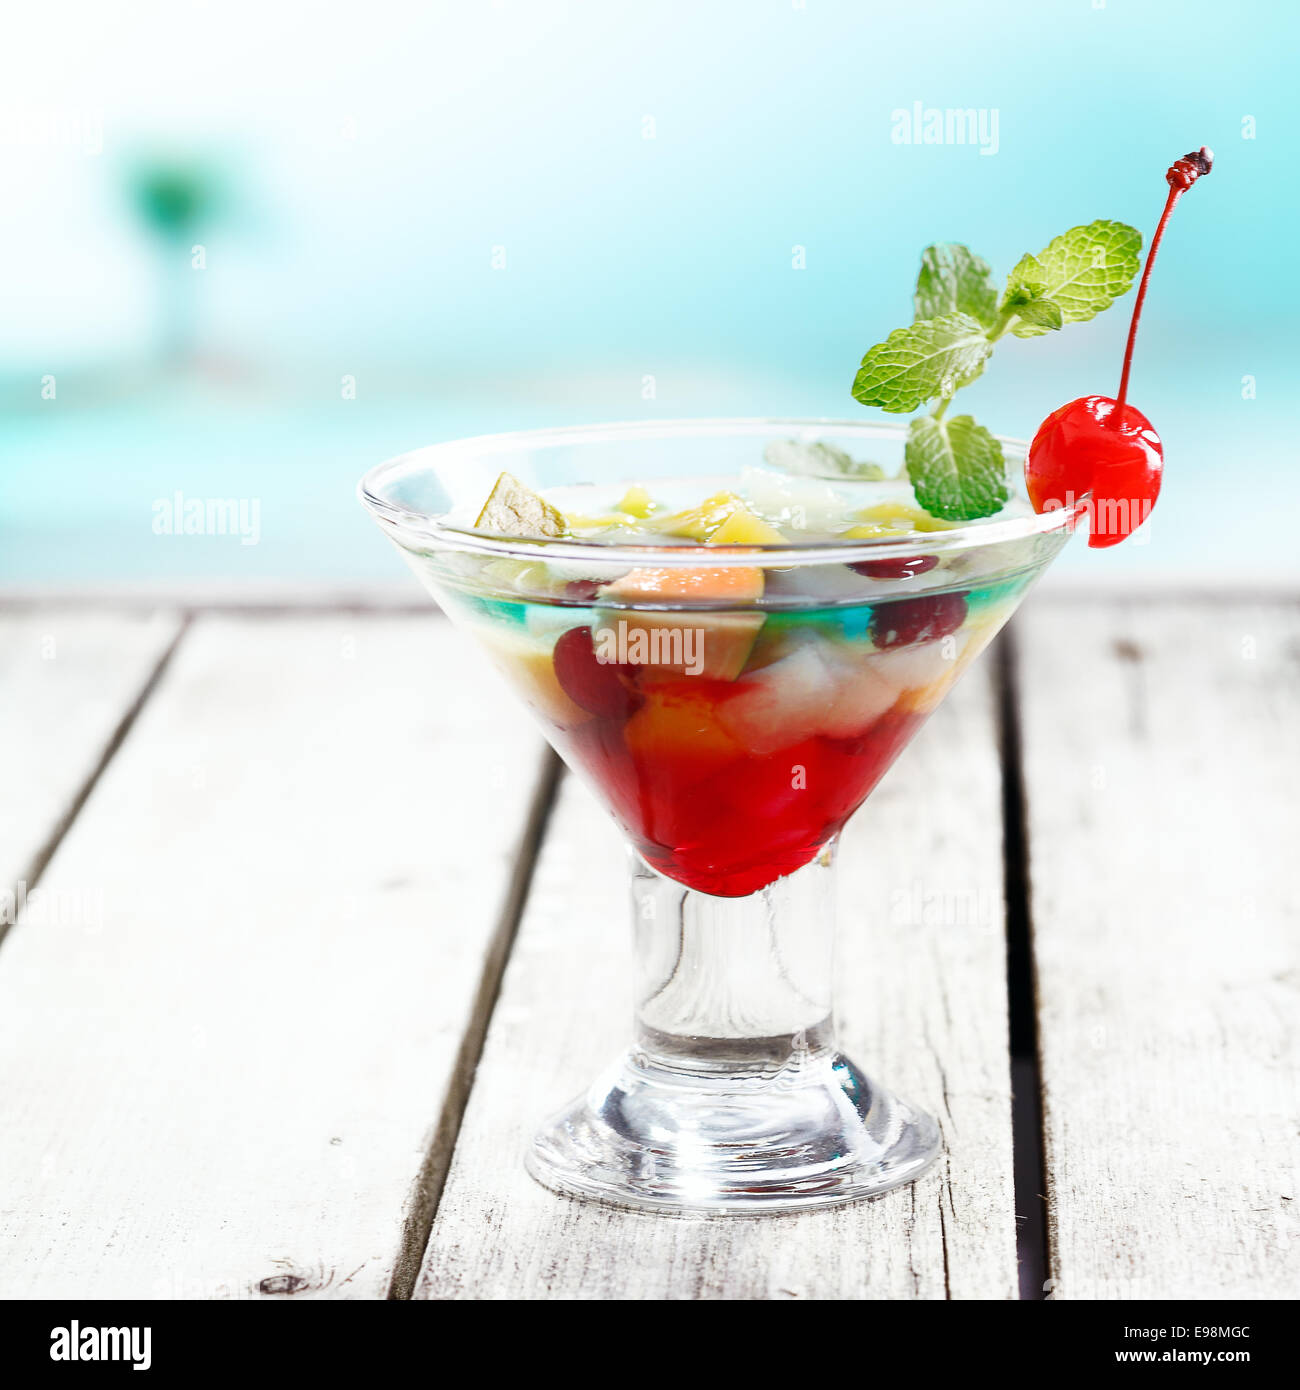 La frutta tropicale ciotola cocktail con curacao blu su un ponte in spiaggia con copyspace Foto Stock